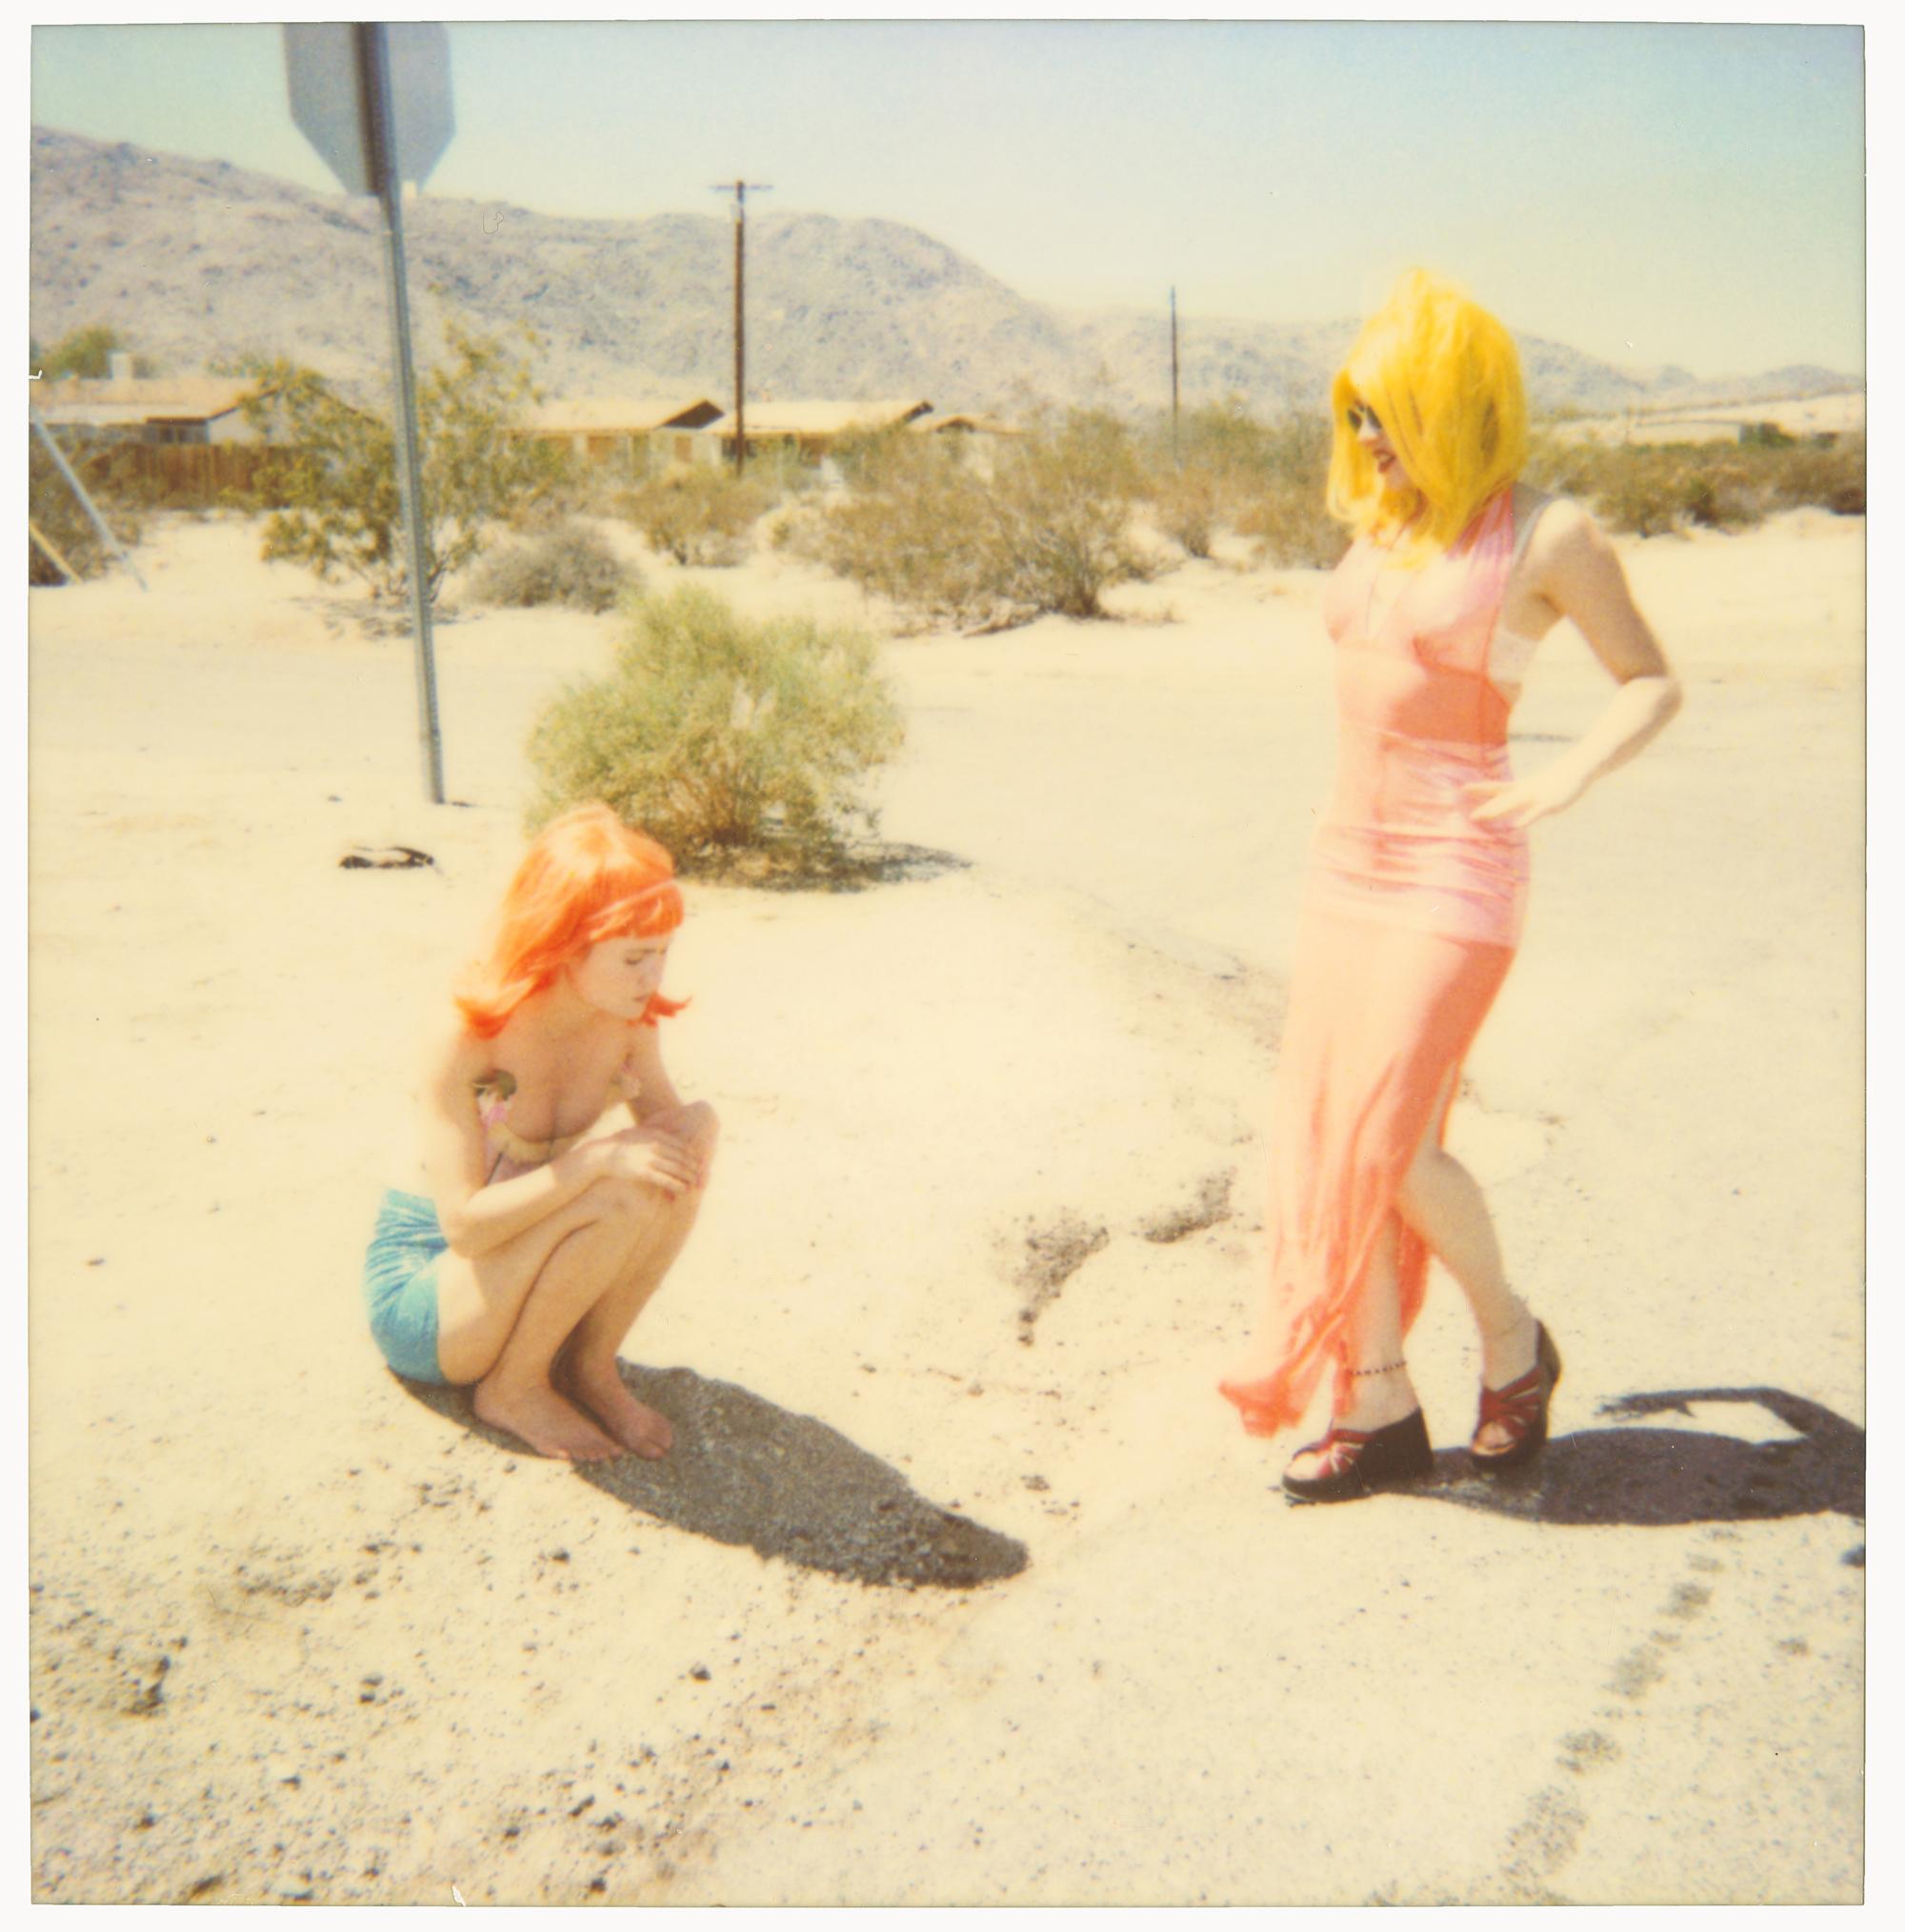 Color Photograph Stefanie Schneider - Radha and Max on Dirt Road (29 Palms, CA) - analogue, Polaroid, contemporain